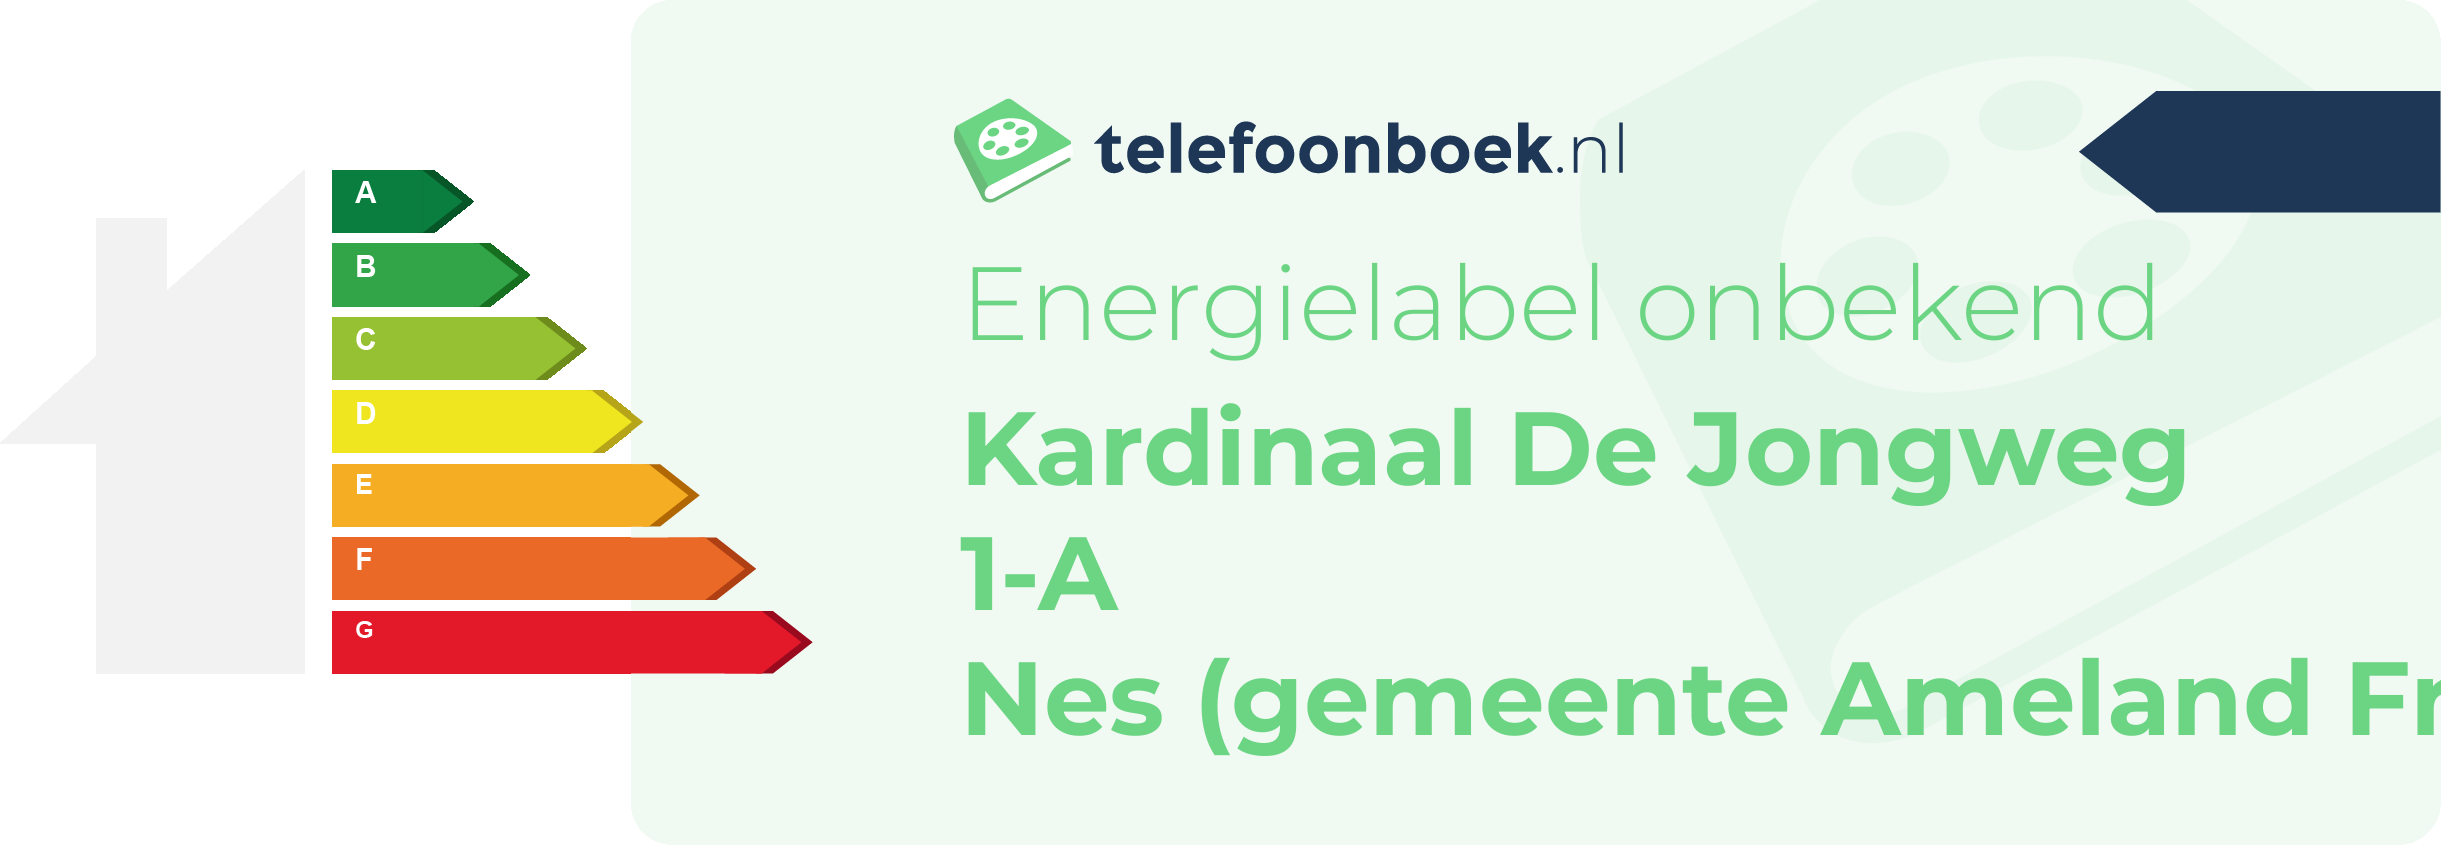 Energielabel Kardinaal De Jongweg 1-A Nes (gemeente Ameland Friesland)